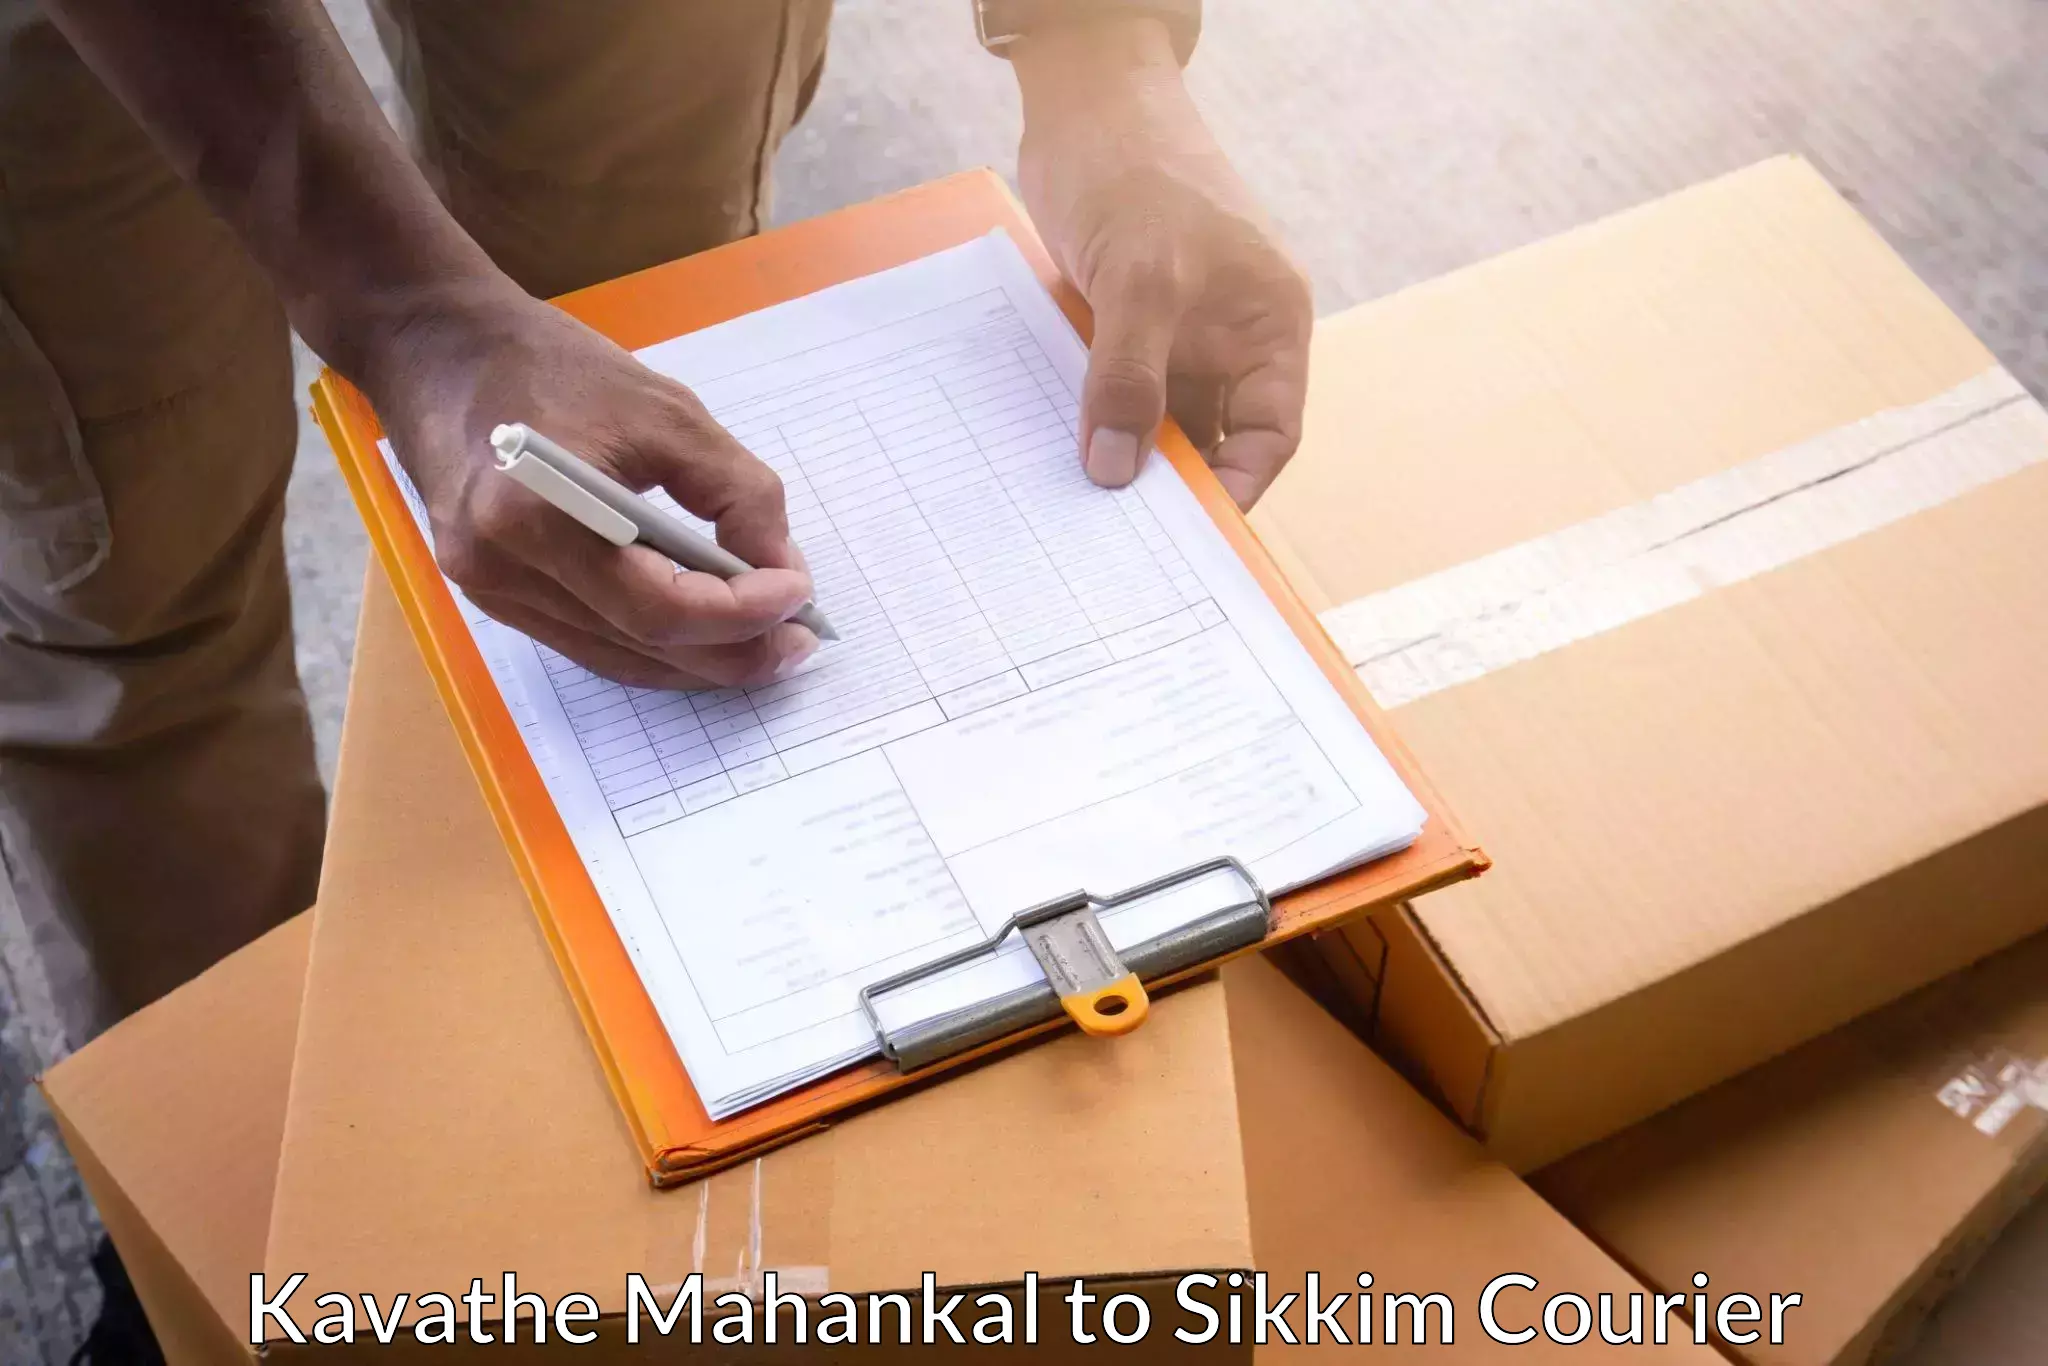 Global courier networks Kavathe Mahankal to Mangan